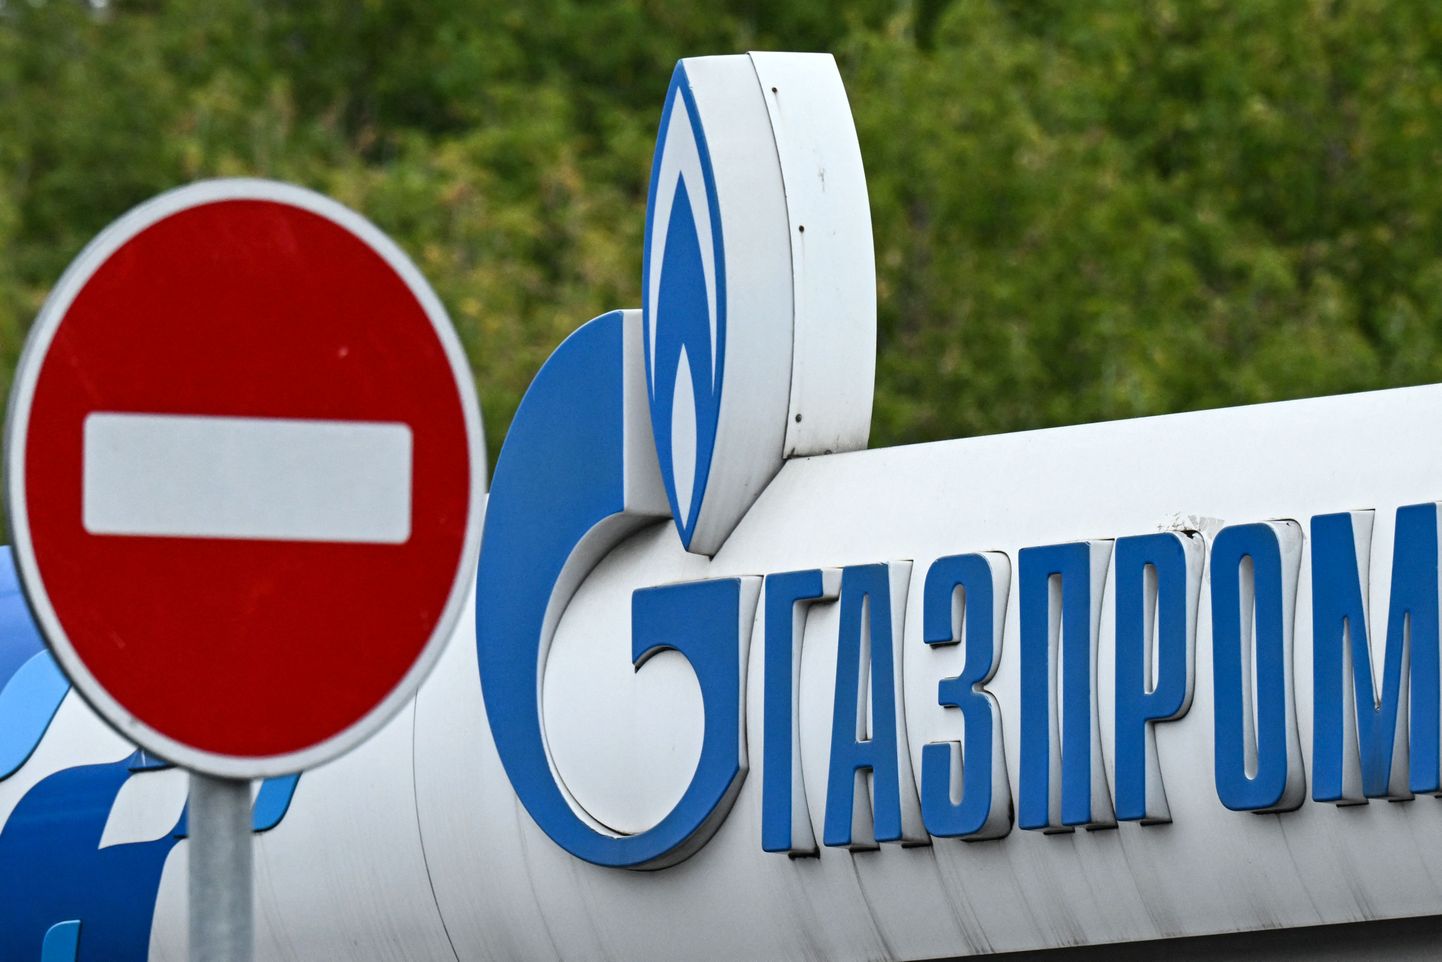 Keelumärk ja Gazpromi logo.